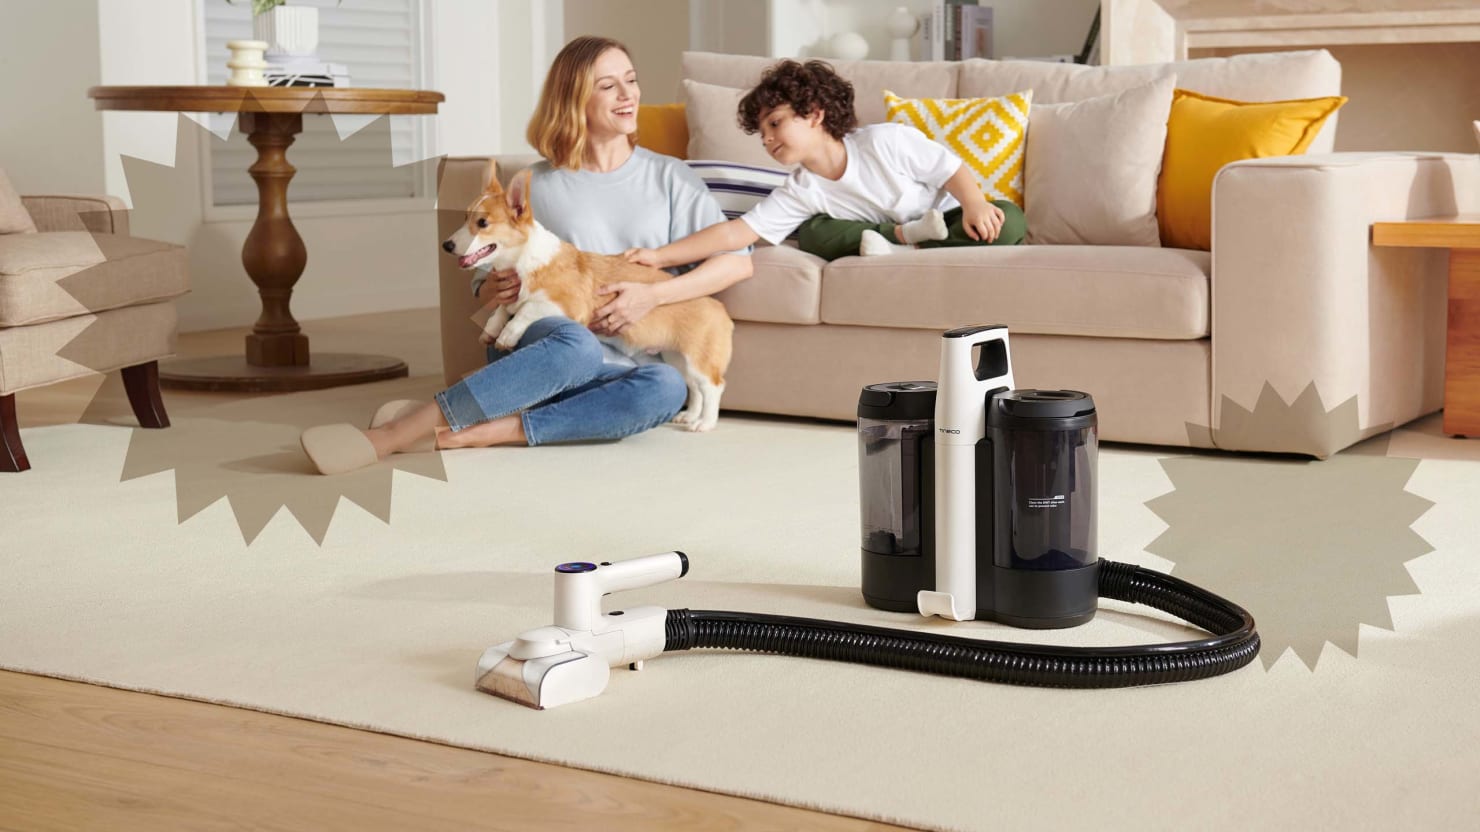 Tineco CARPET ONE Smart Carpet Cleaner Machine, Lightweight Carpet